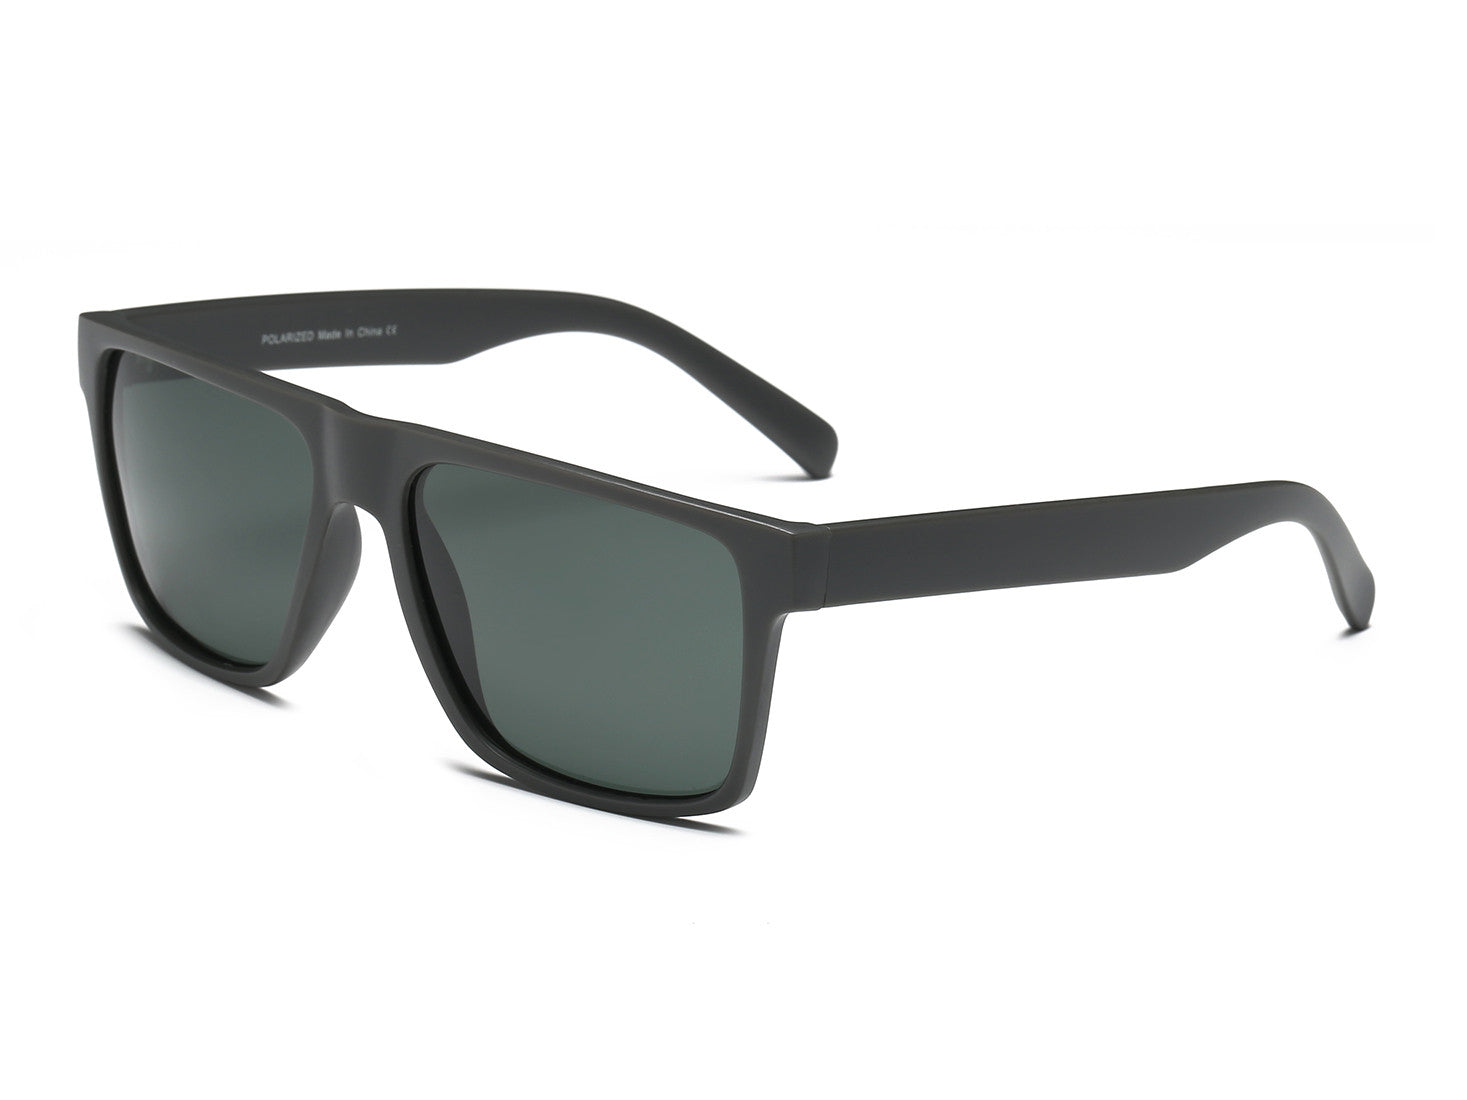 P1006 - Retro VINTAGE Polarized Square Sunglasses Matte grey frame with green lens